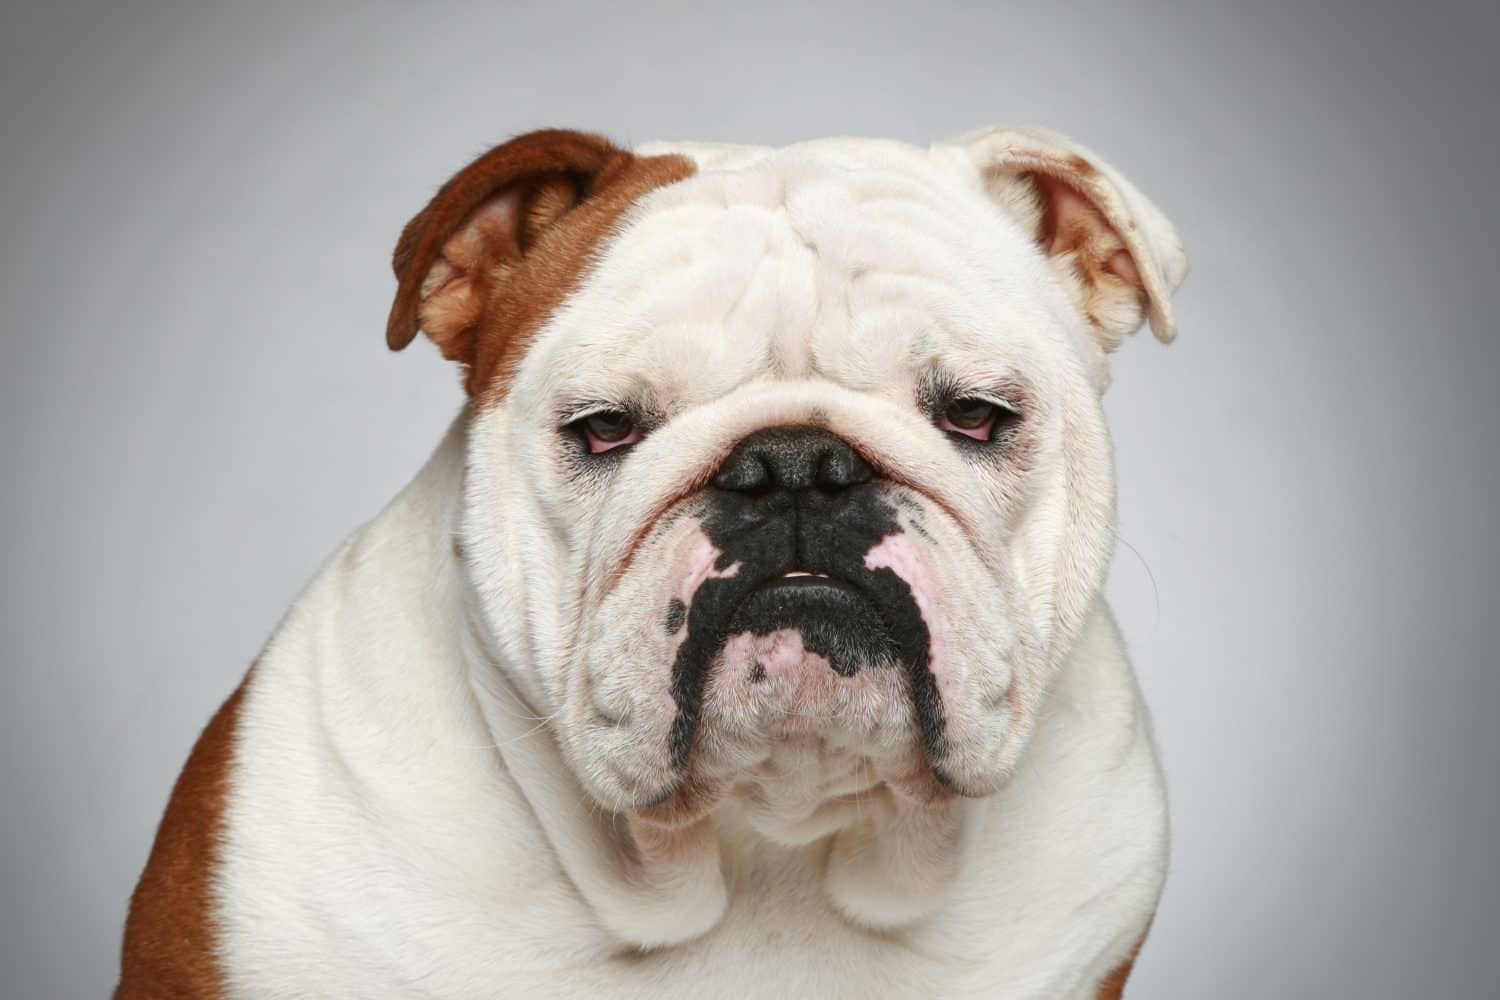 English bulldog. Close-up portrait on grey background